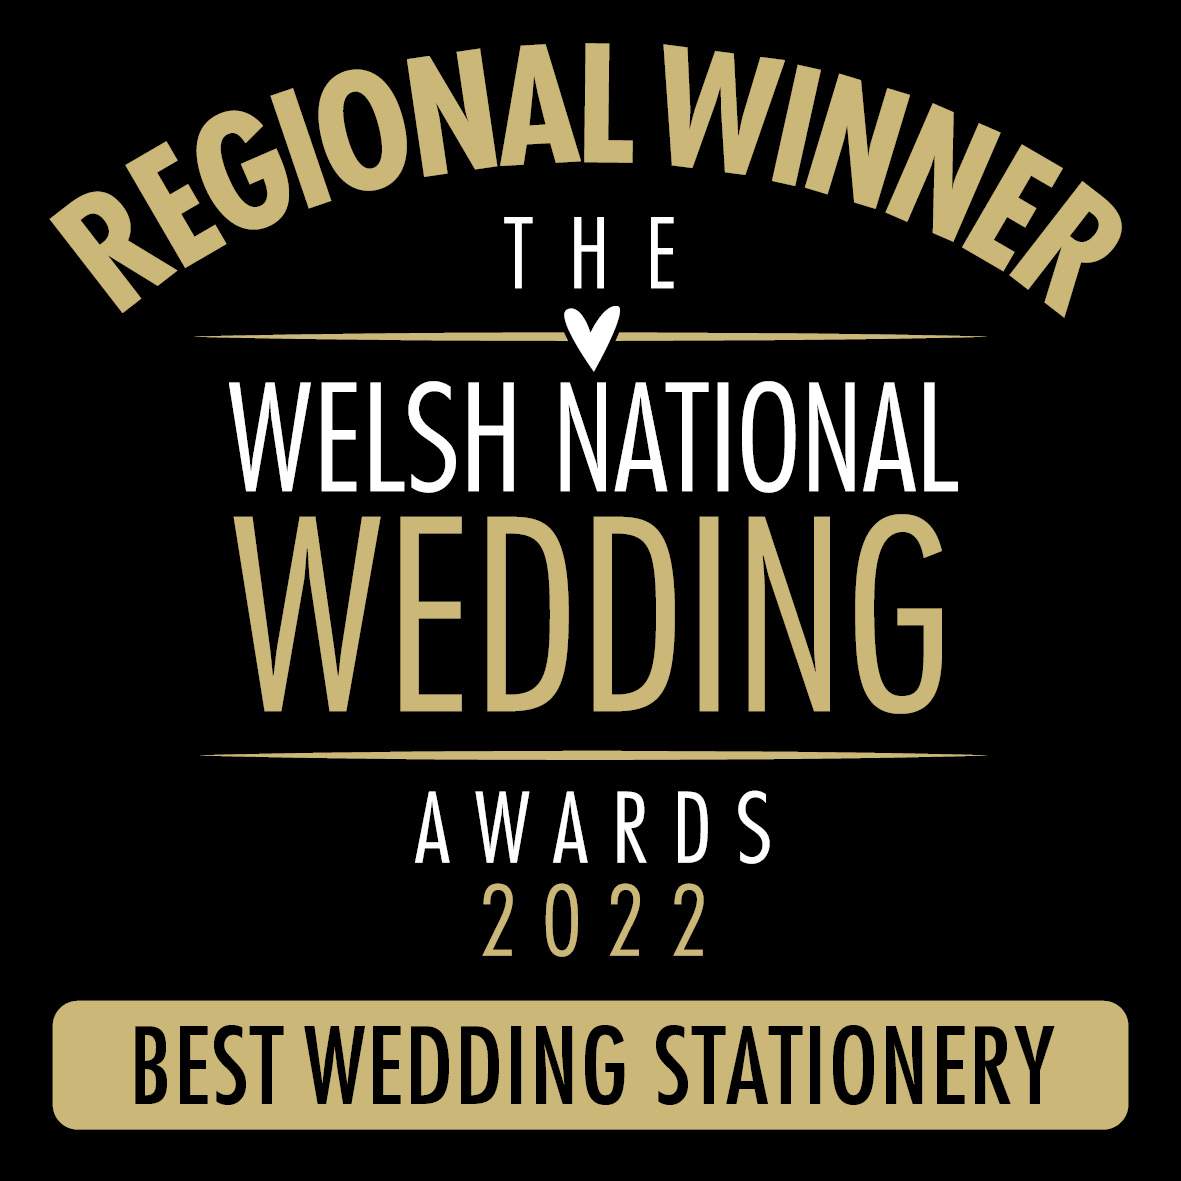 regional winner the welsh national wedding awards best wedding stationery